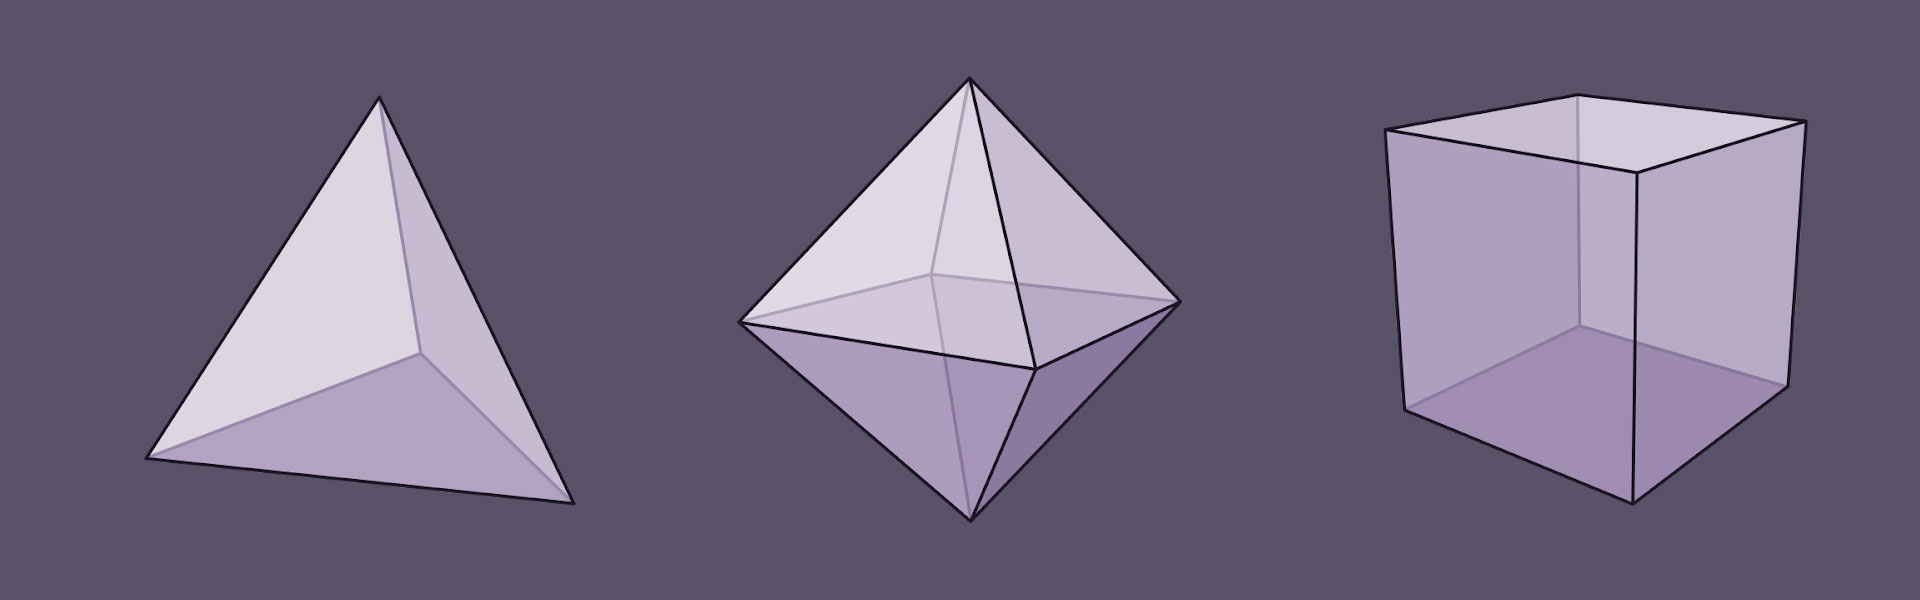  Polyhedron model.
